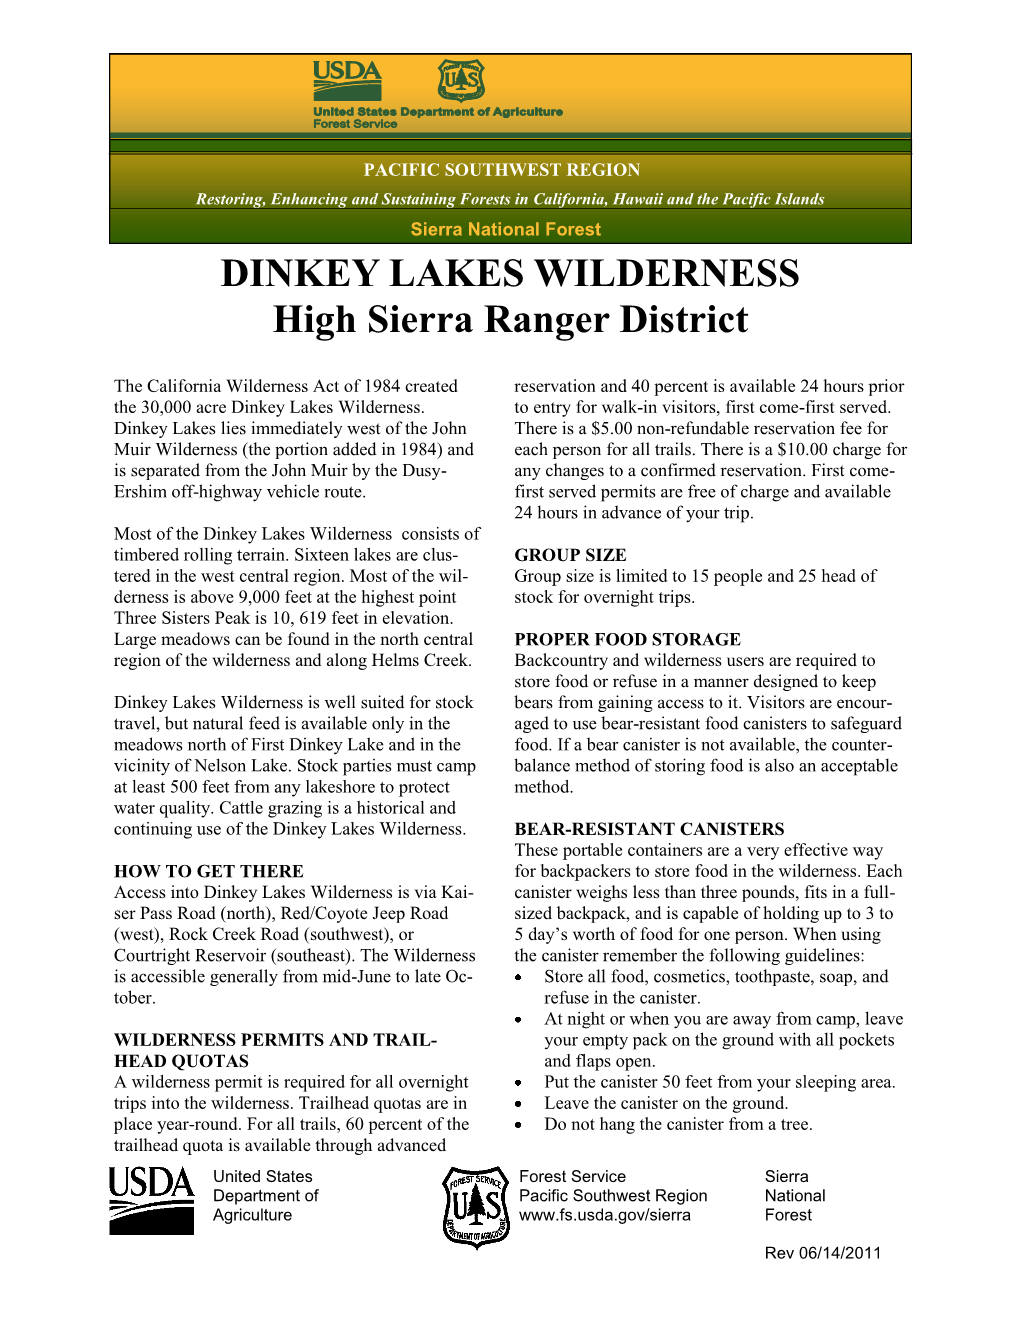 DINKEY LAKES WILDERNESS High Sierra Ranger District